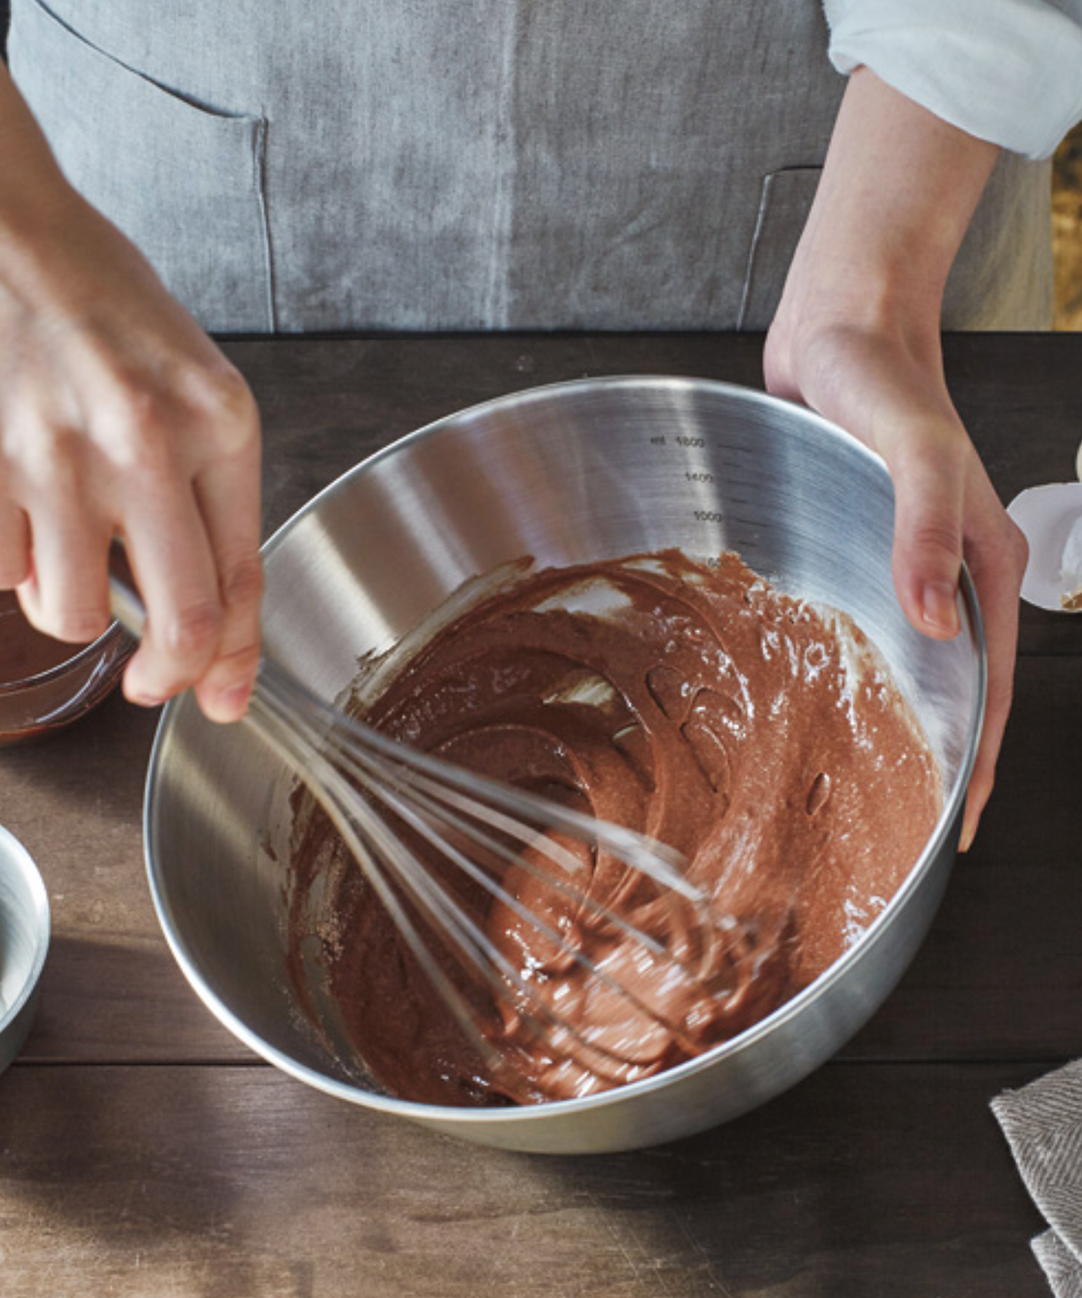 mixing chocolate batter